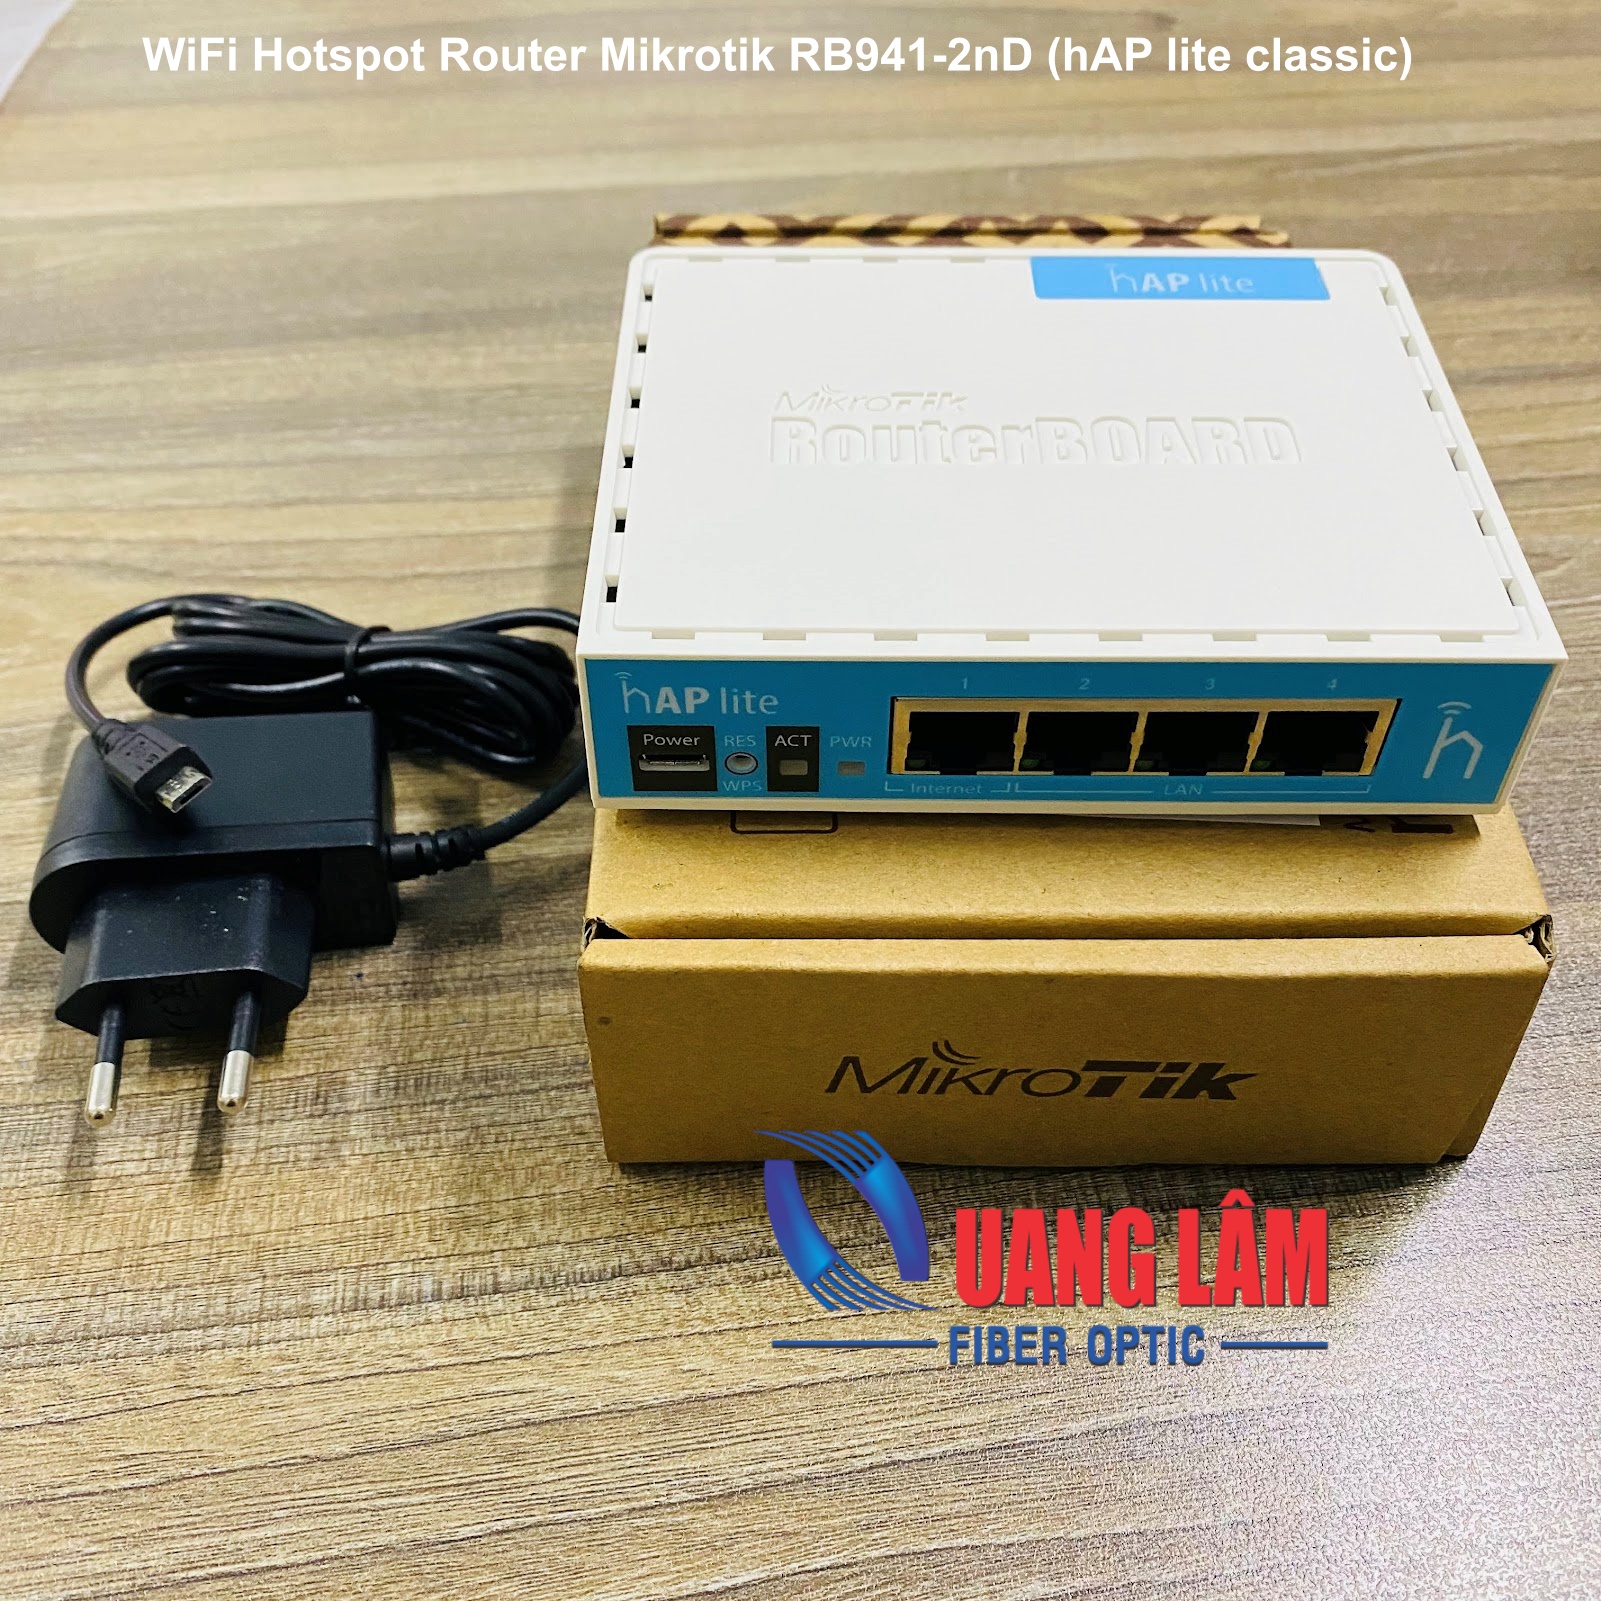 WiFi router hAp lite Mikrotik RB941